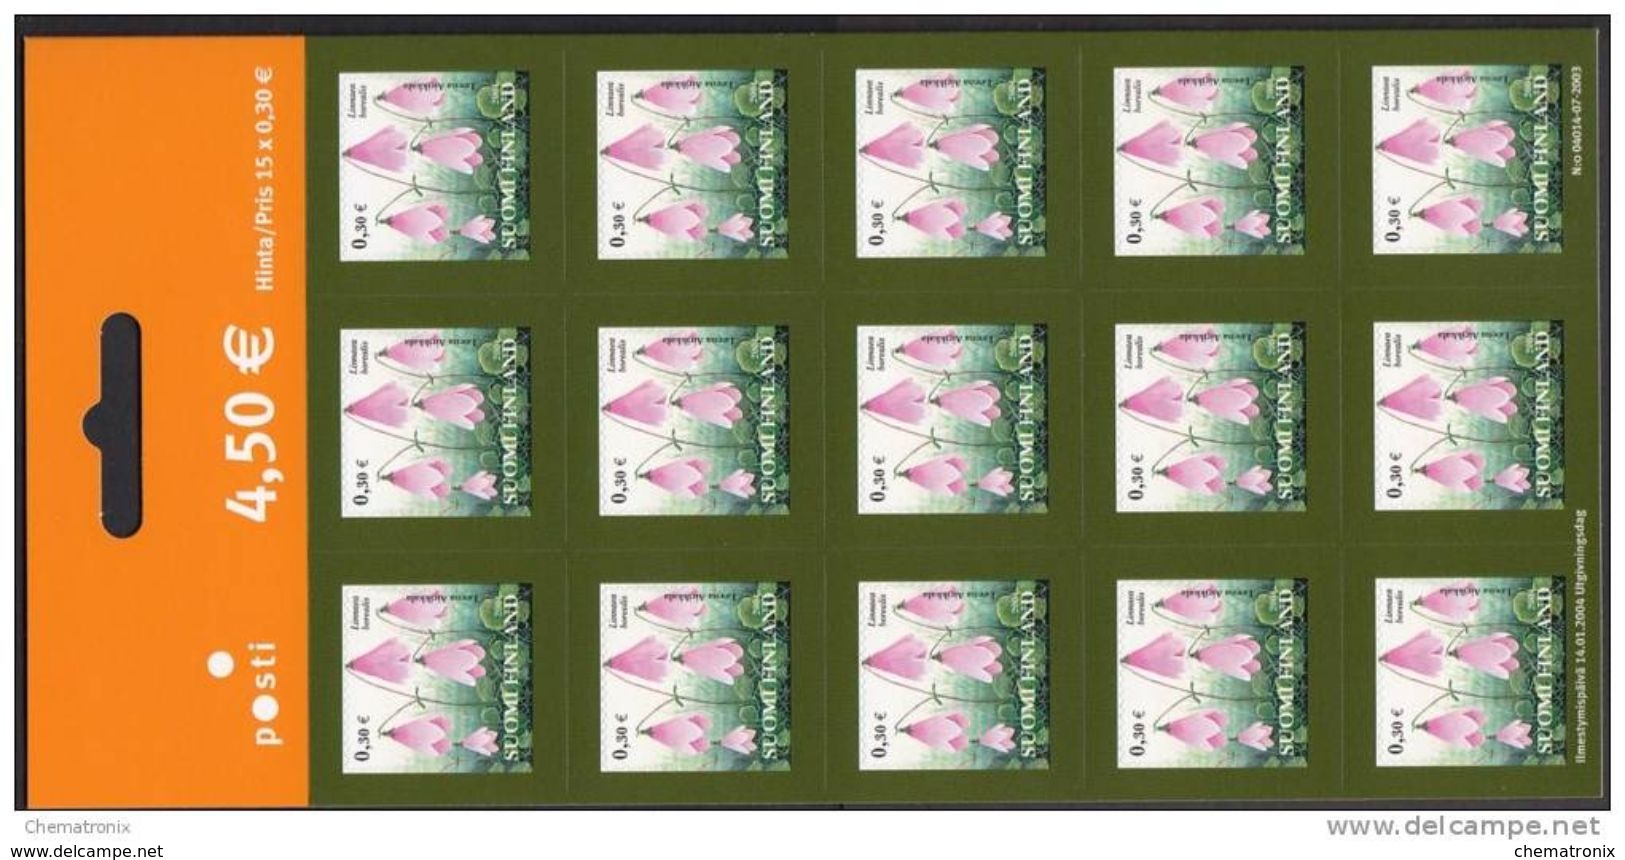 Finlandia 2004 - Flor Gemela - Pliego De 15 - MNH ** - Unused Stamps